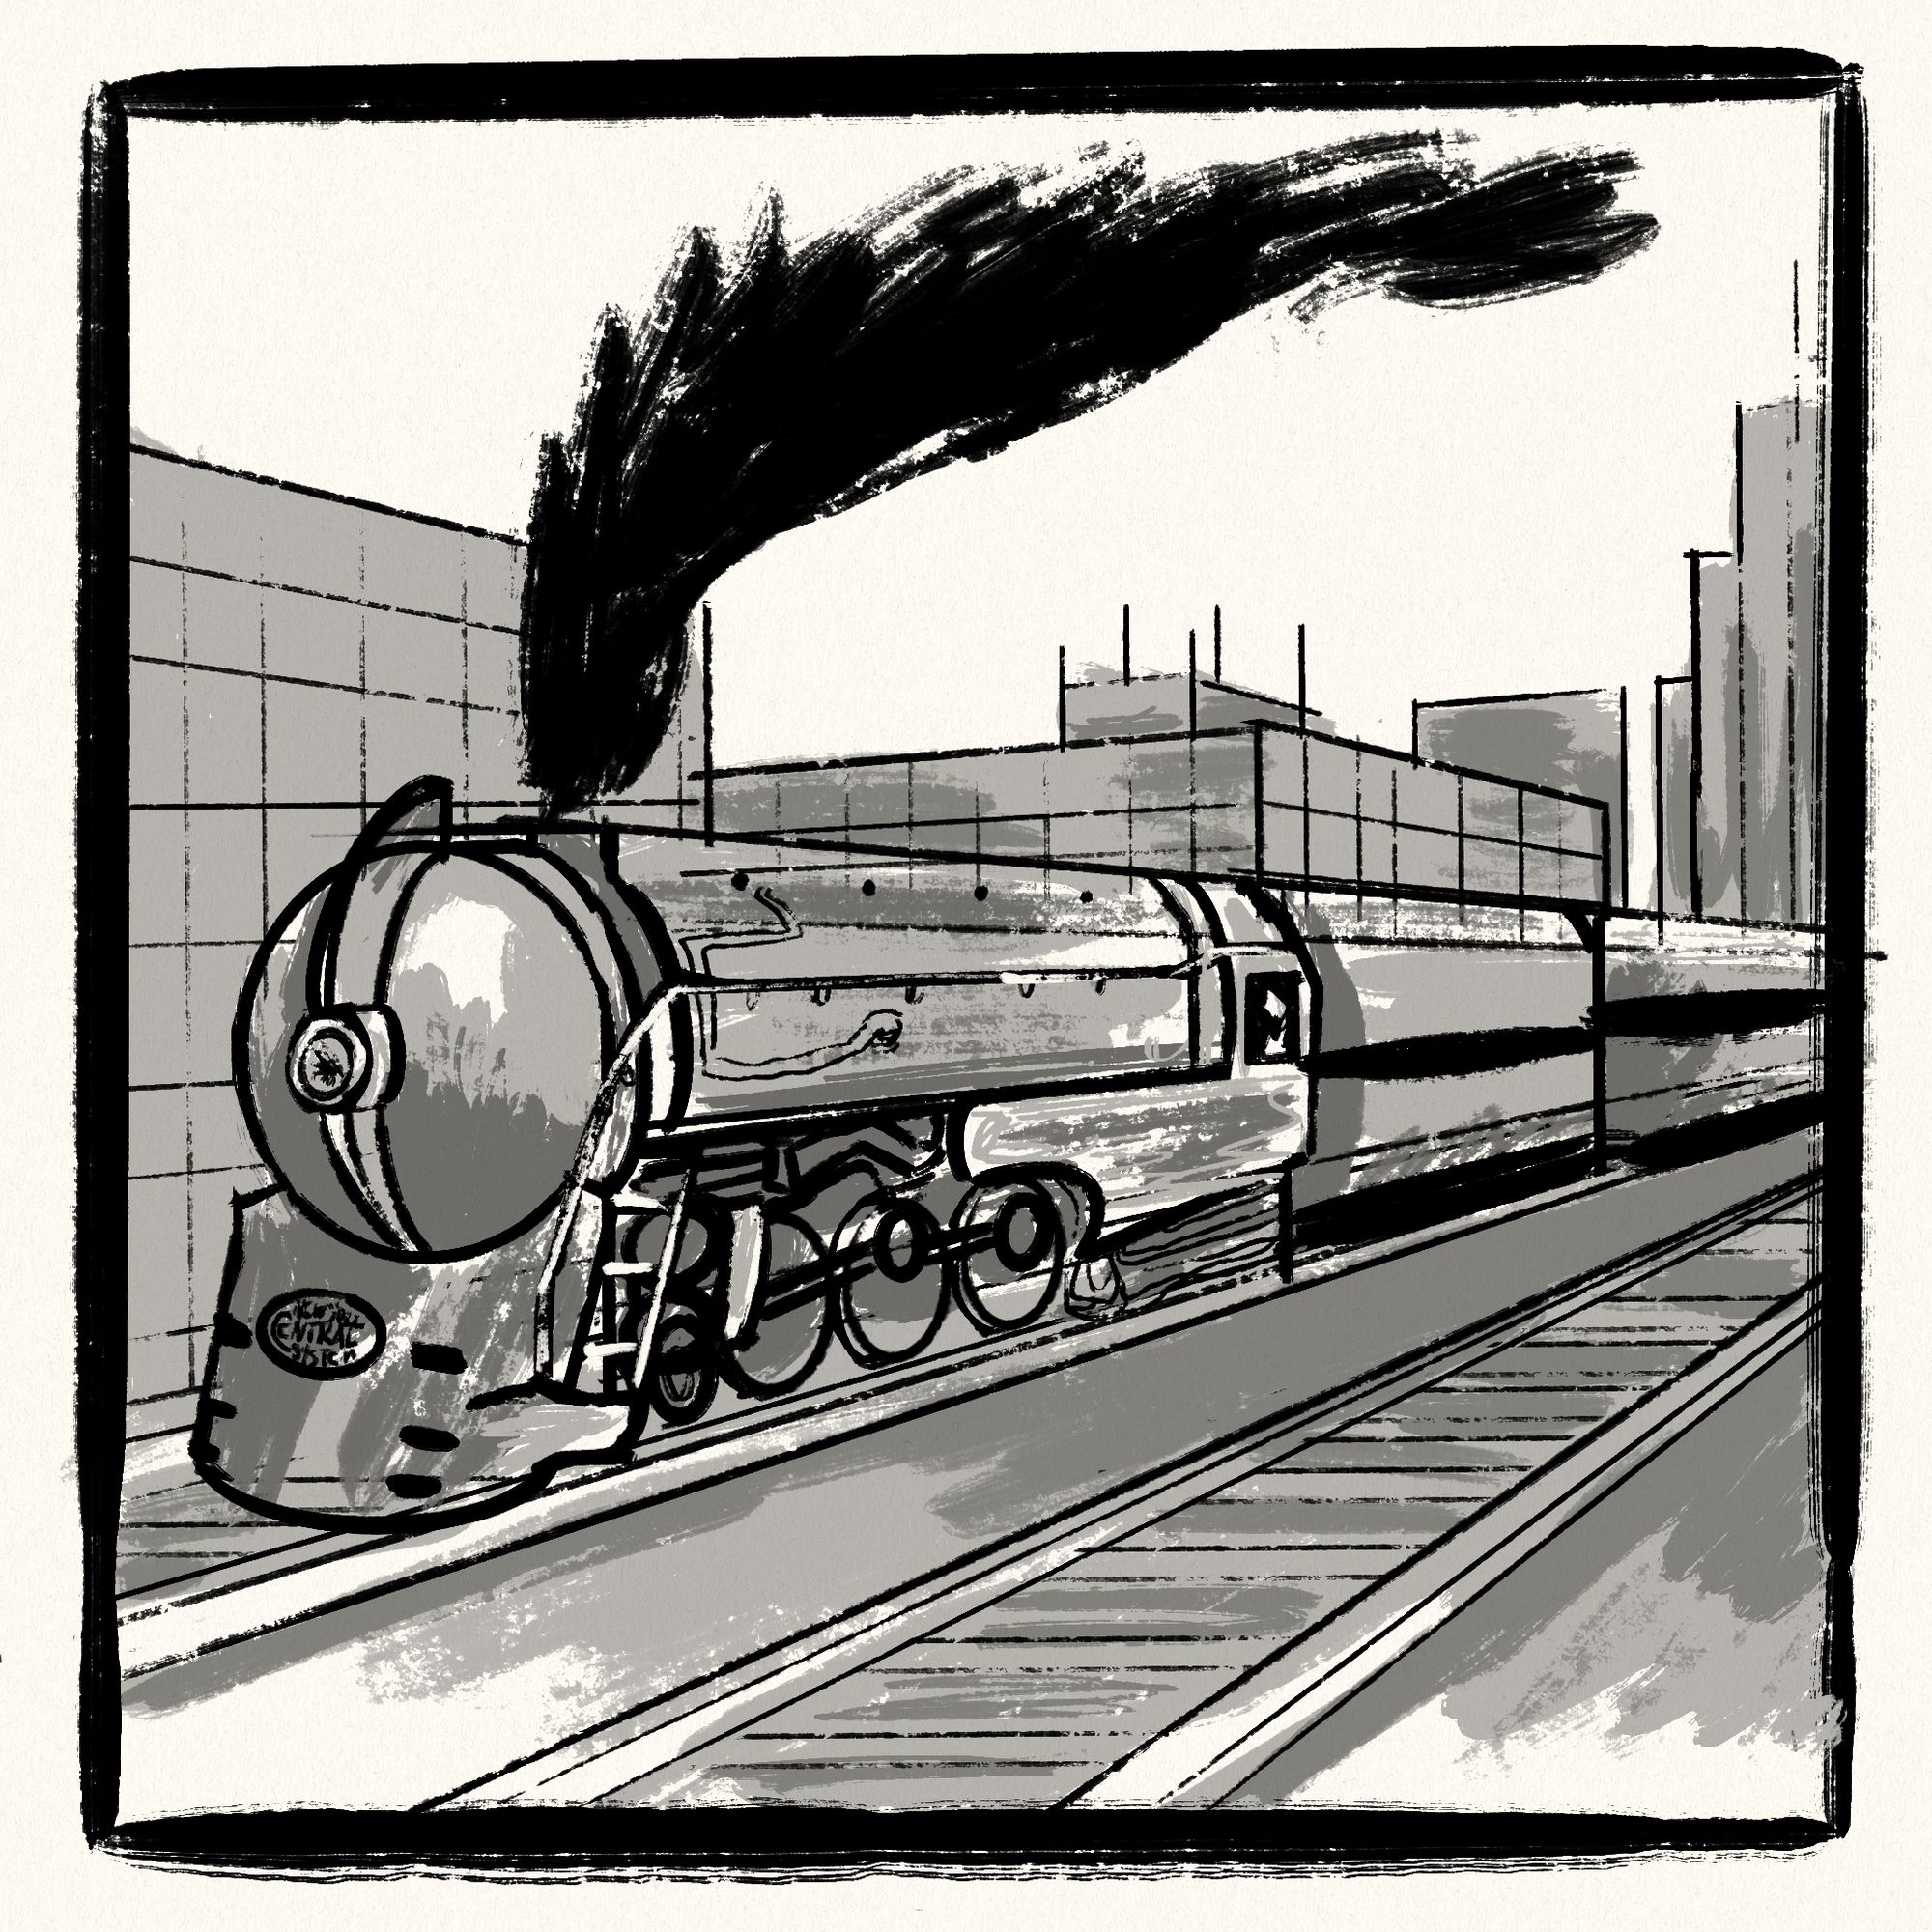 a digital drawing of a vintage train